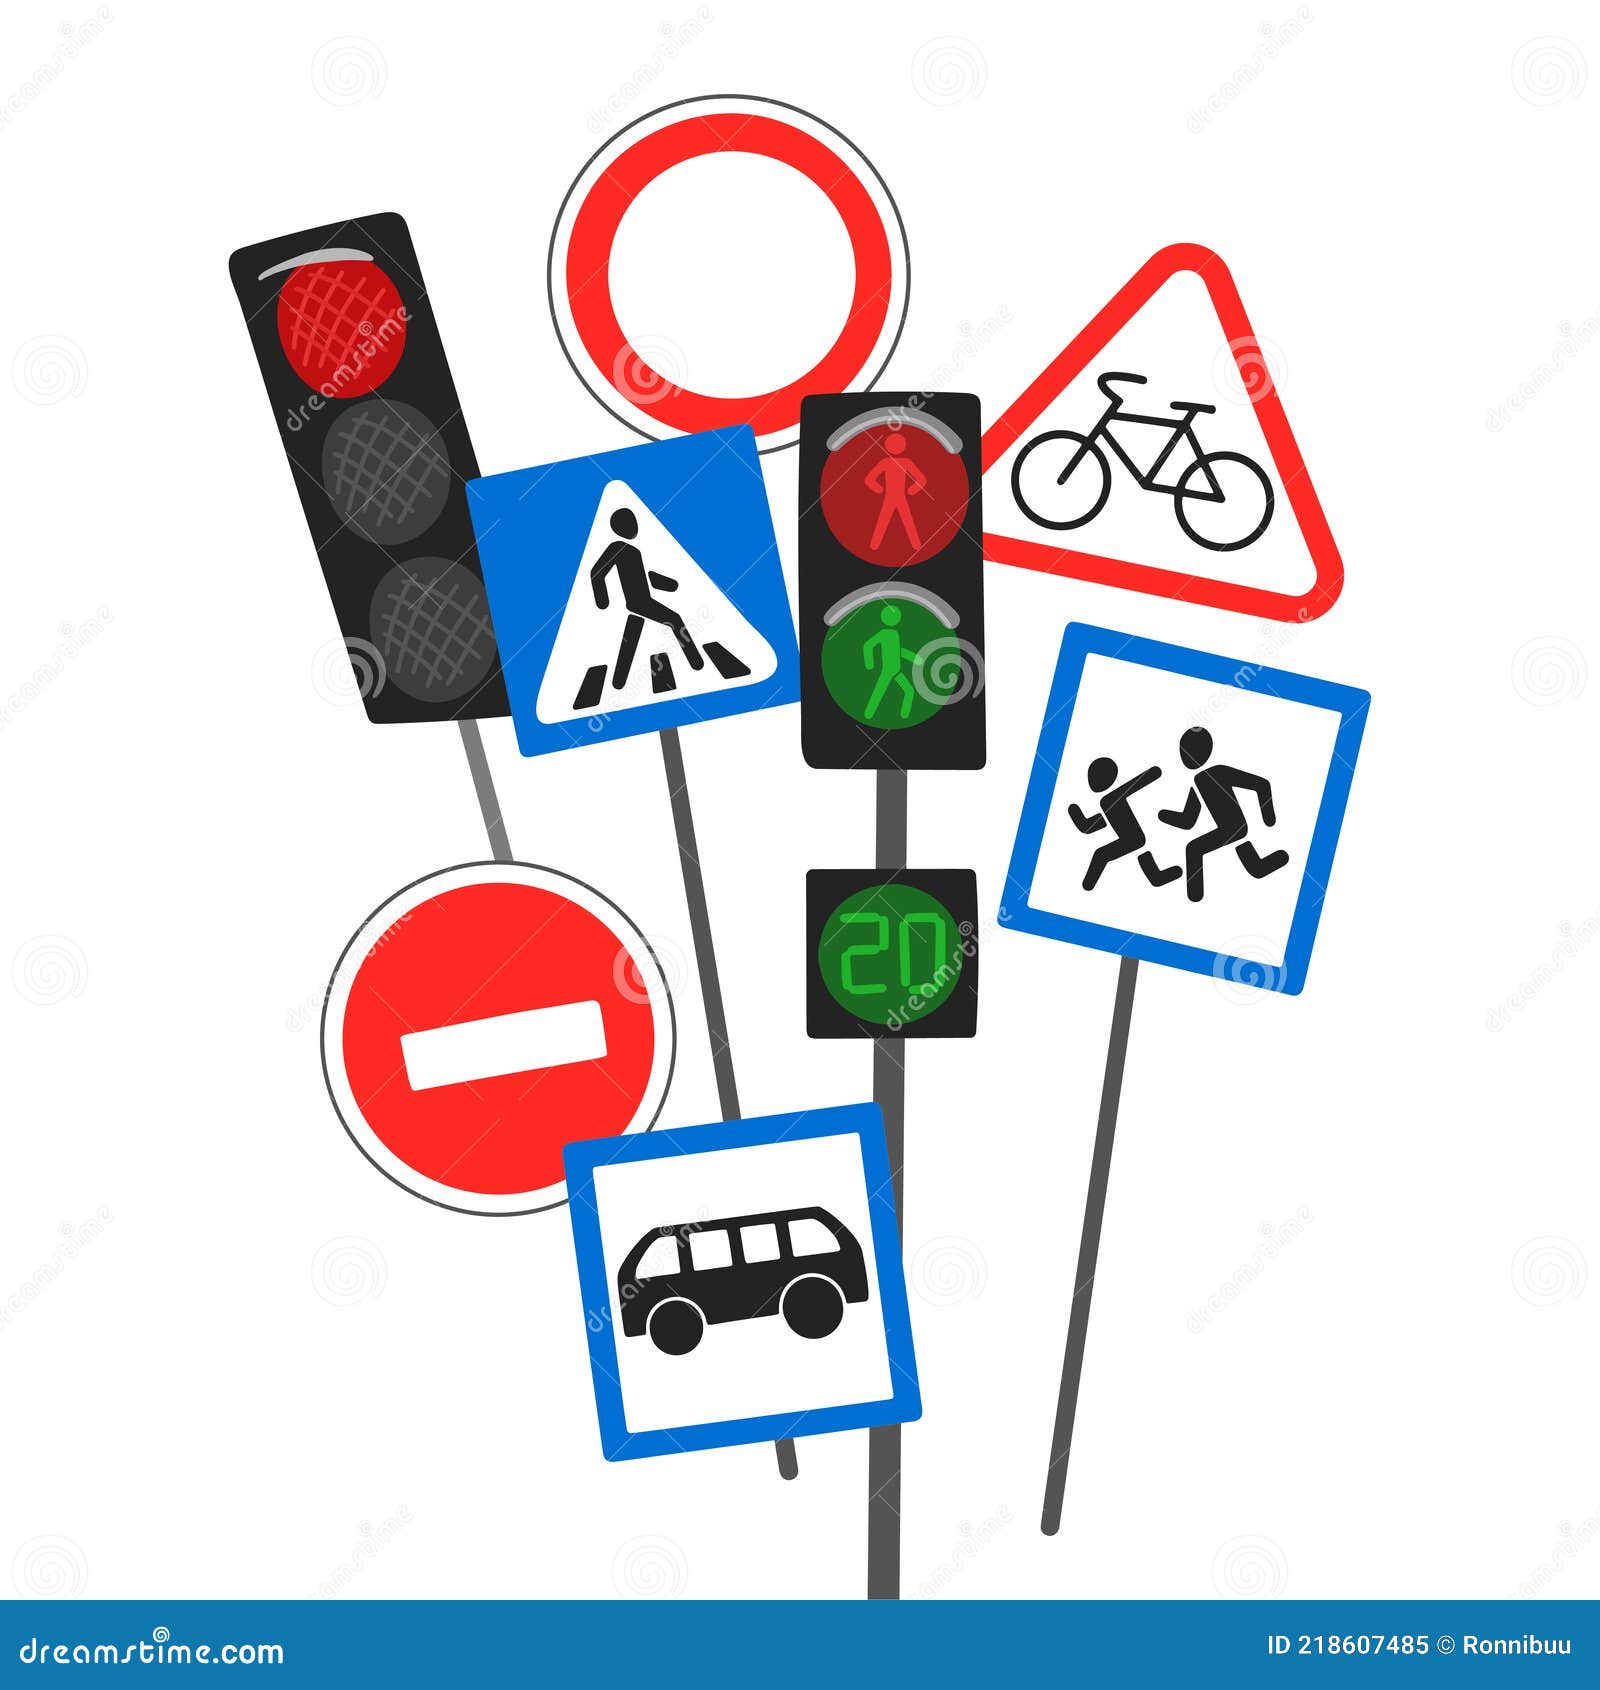 Road Safety Poster Making Competition – dpsjind-saigonsouth.com.vn